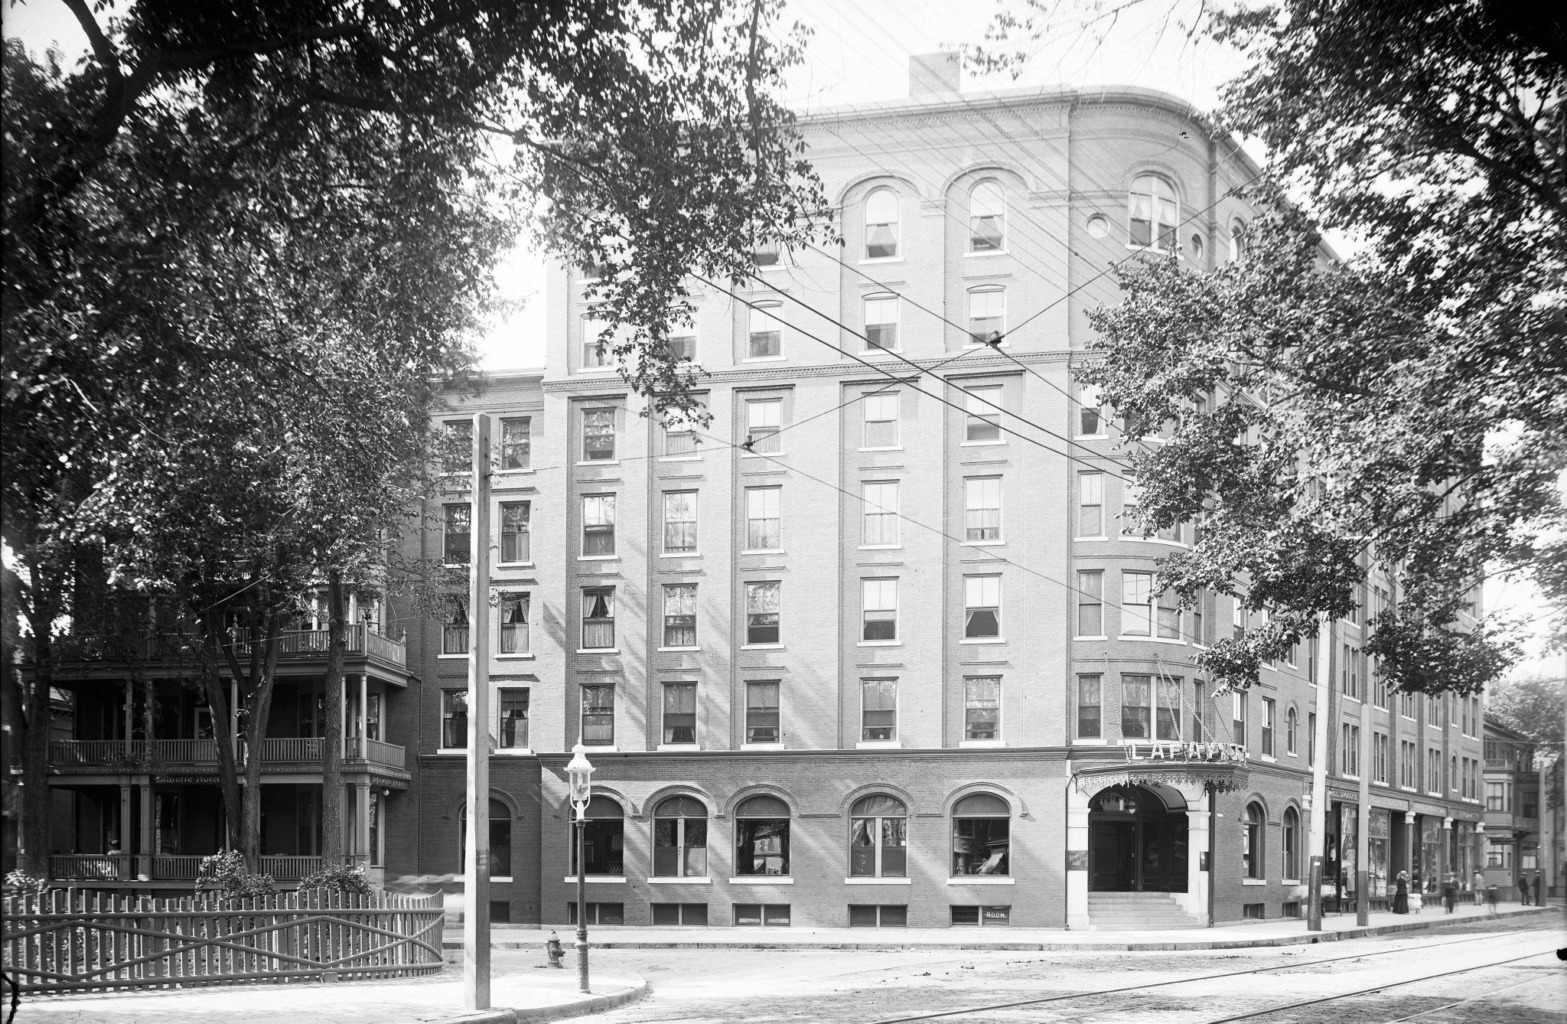 The Lafayette Hotel in 1903